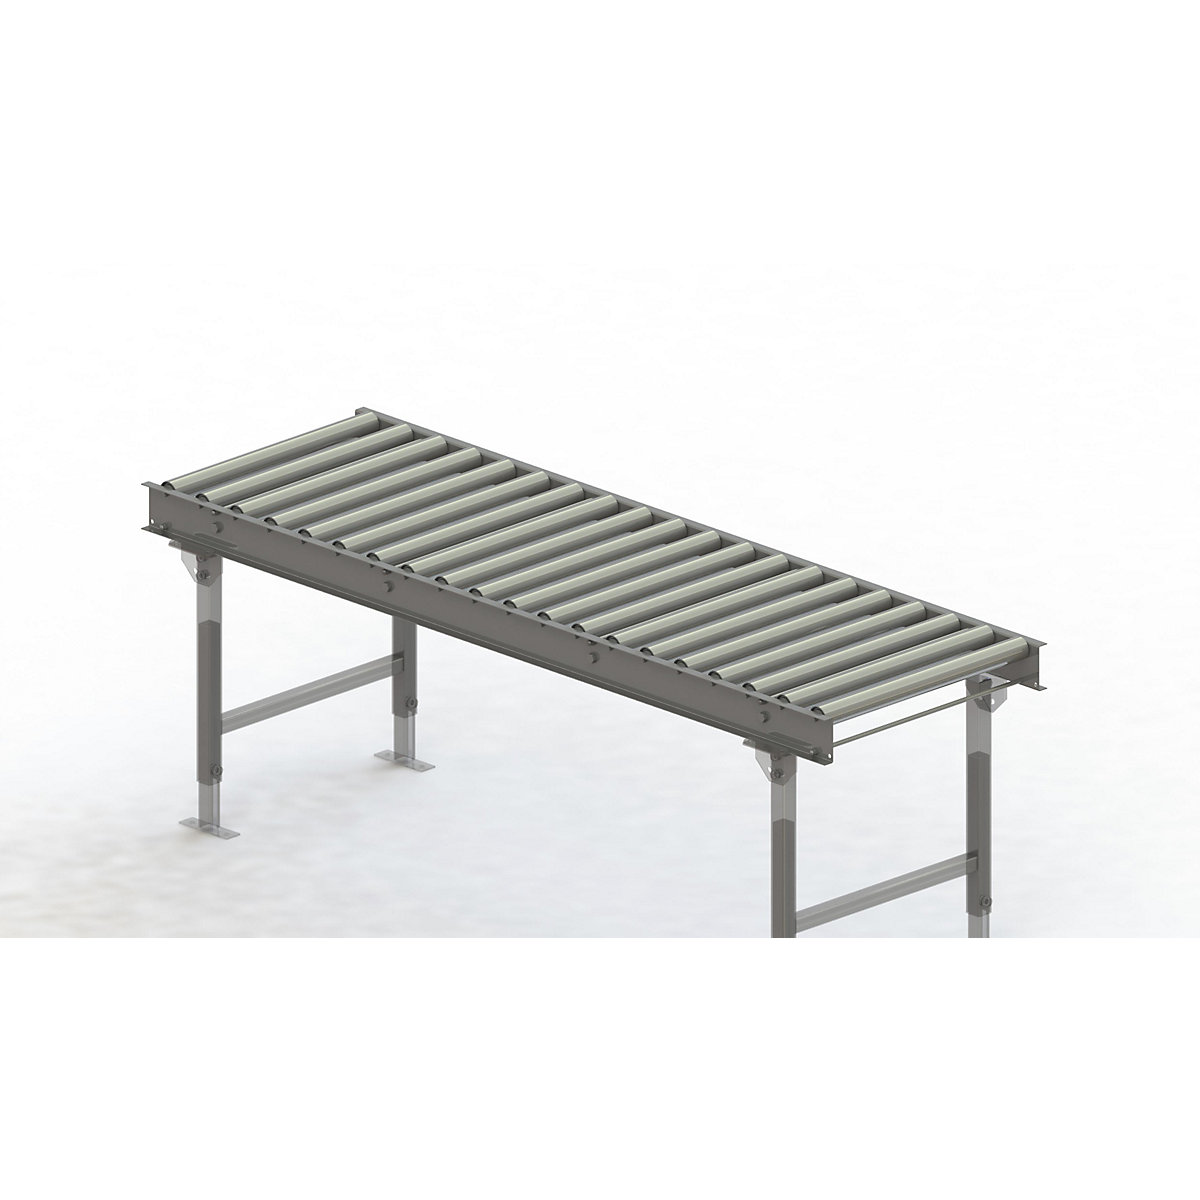 Gura – Roller conveyor, steel frame with zinc plated steel rollers, track width 600 mm, distance between axles 100 mm, length 2 m